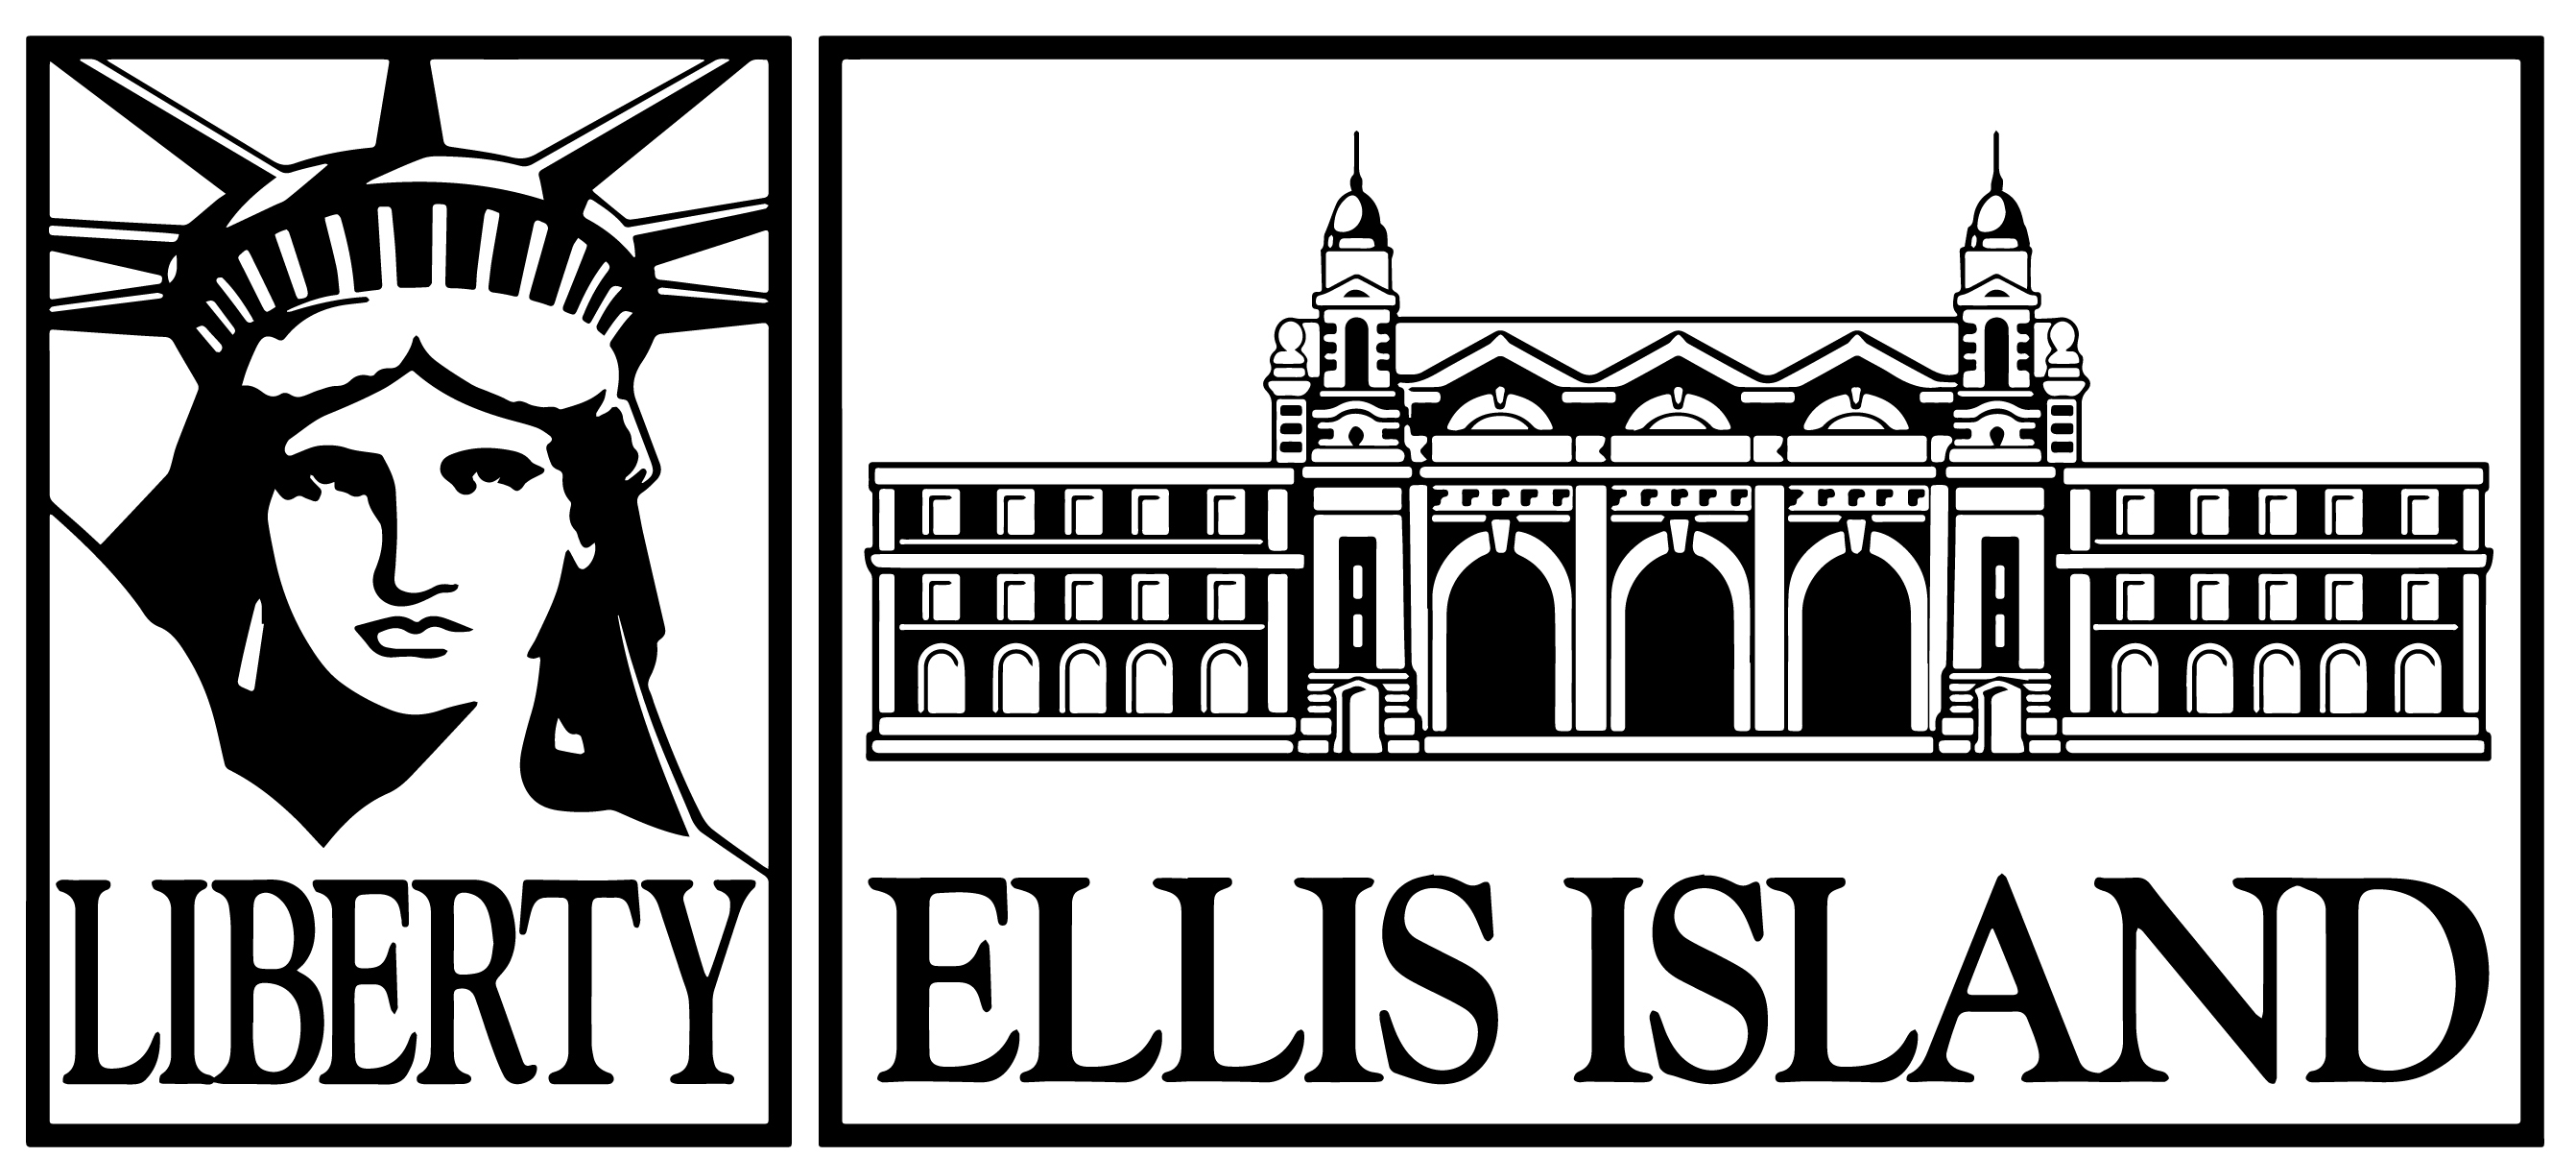 The Statue of Liberty-Ellis Island Foundation, Inc. logo